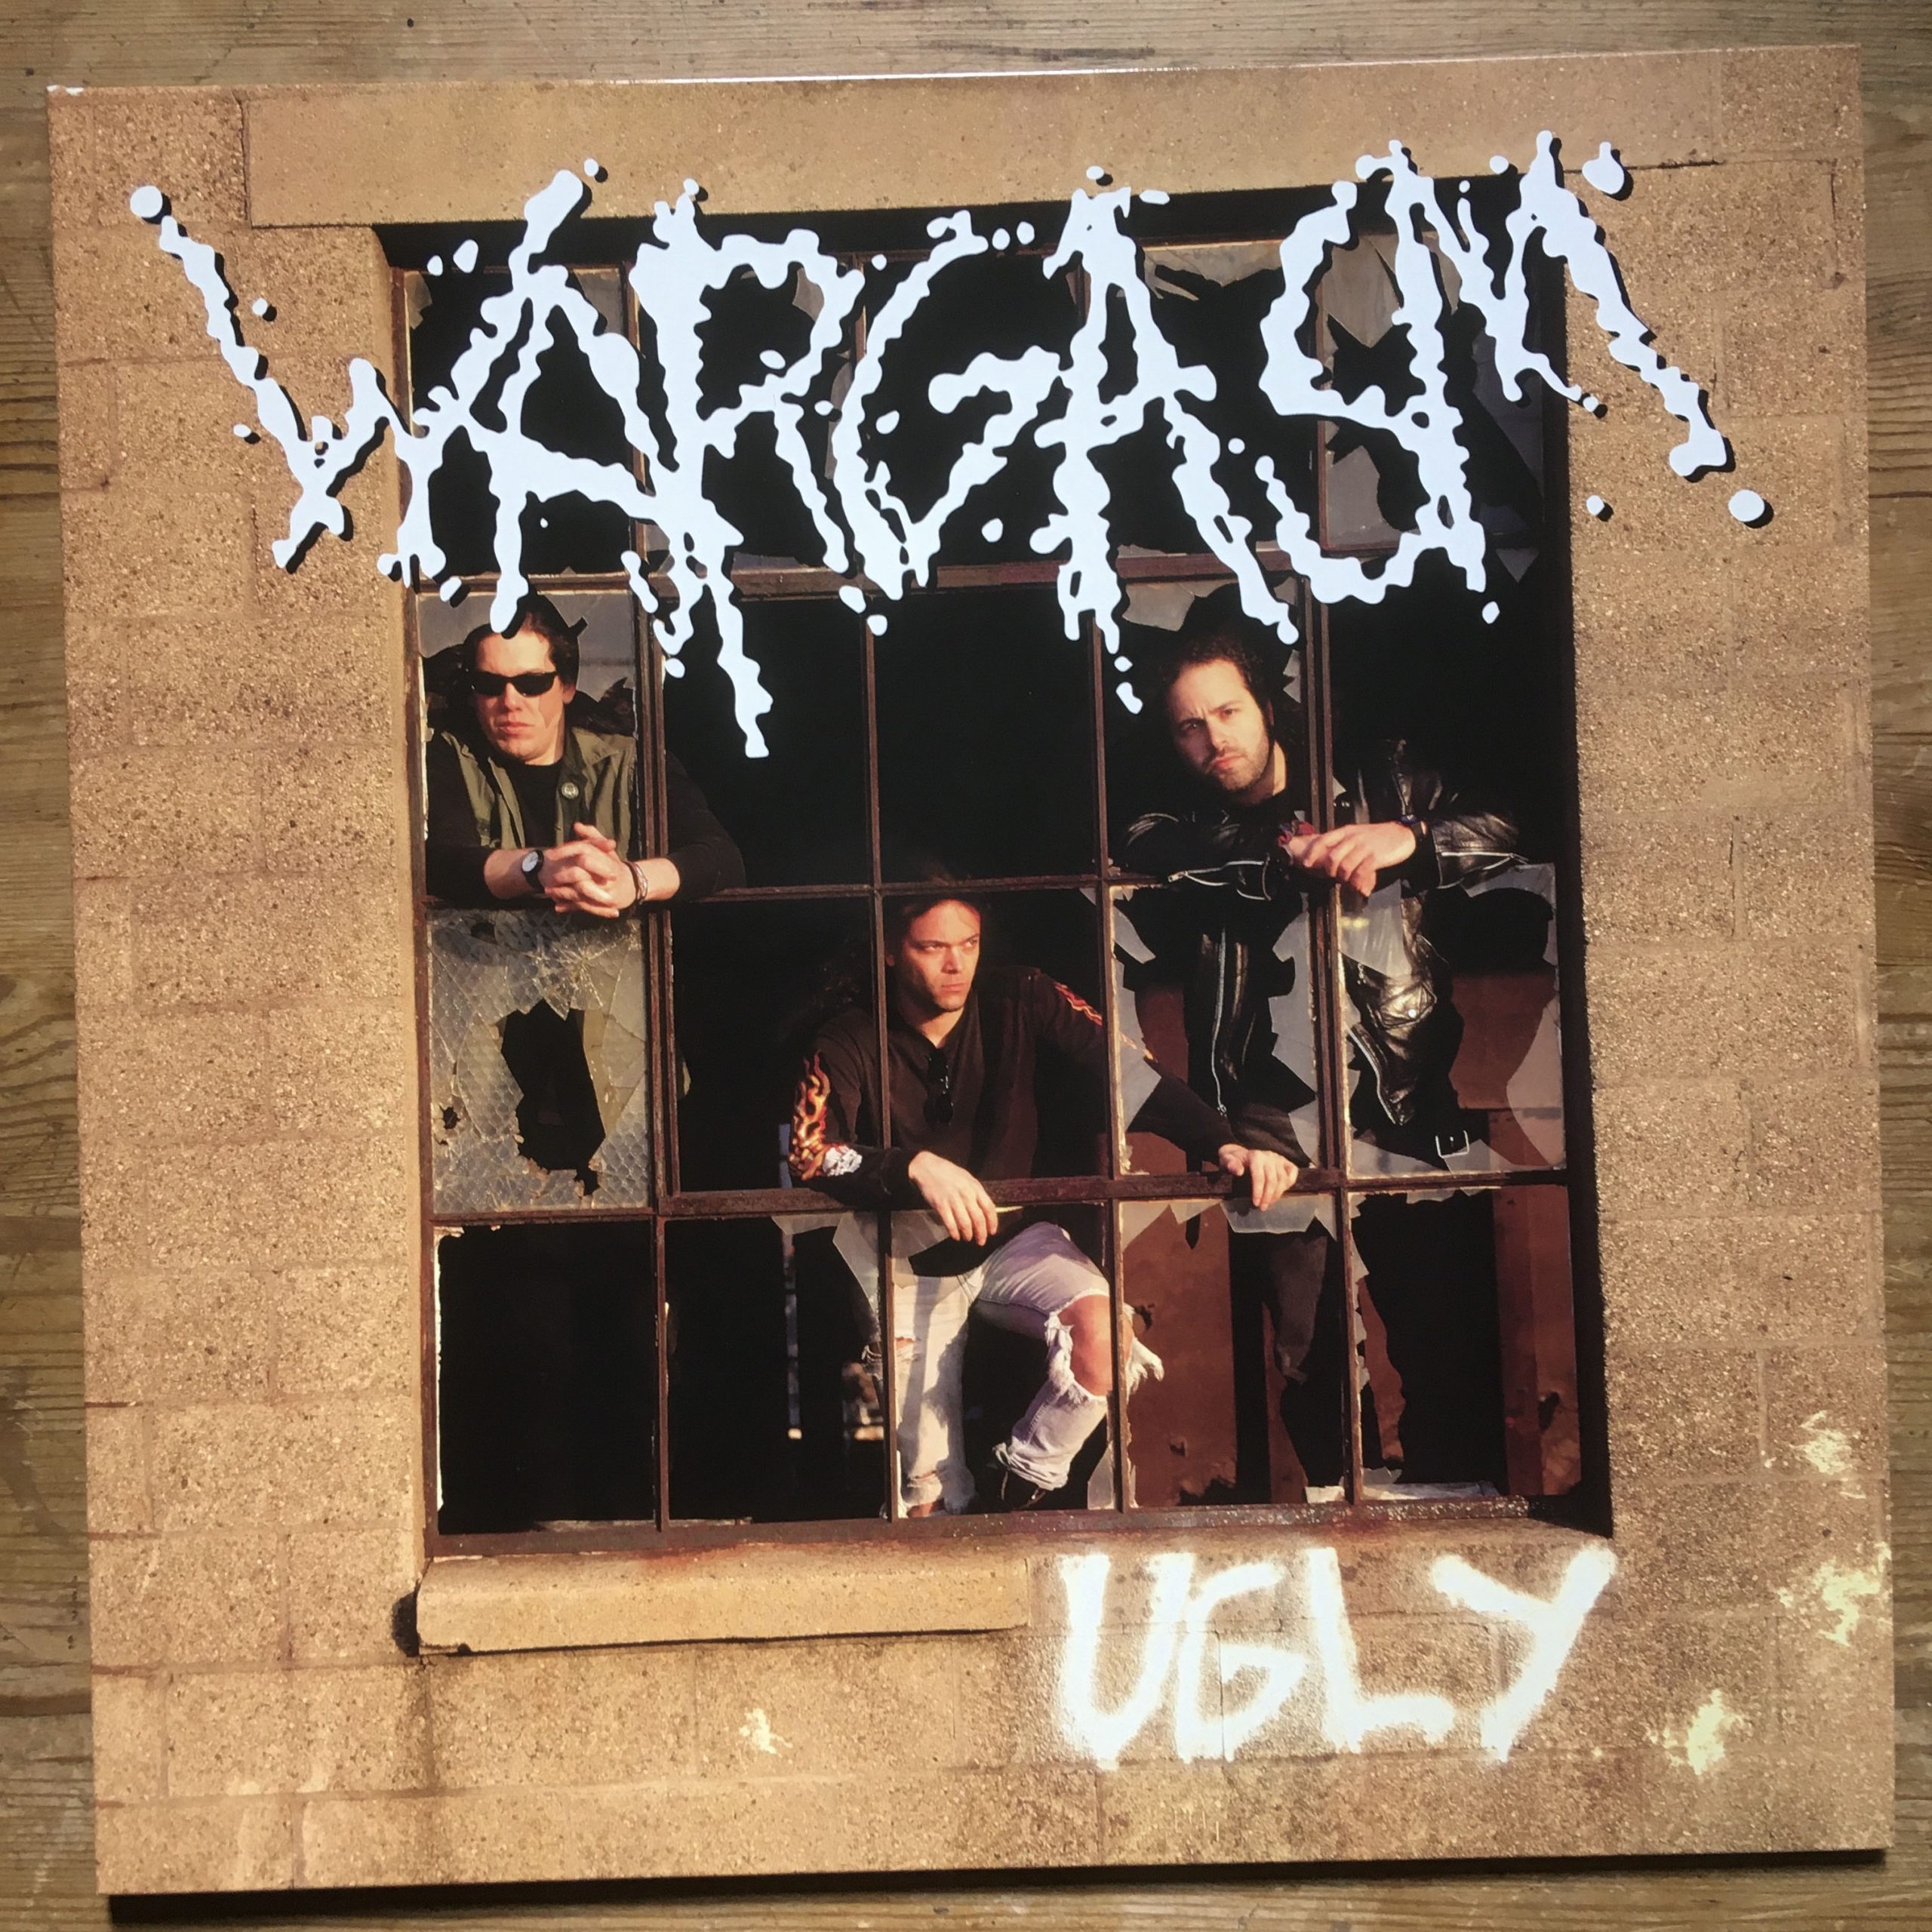 Photo of the Wargasm - "Ugly" 2LP (Black vinyl)